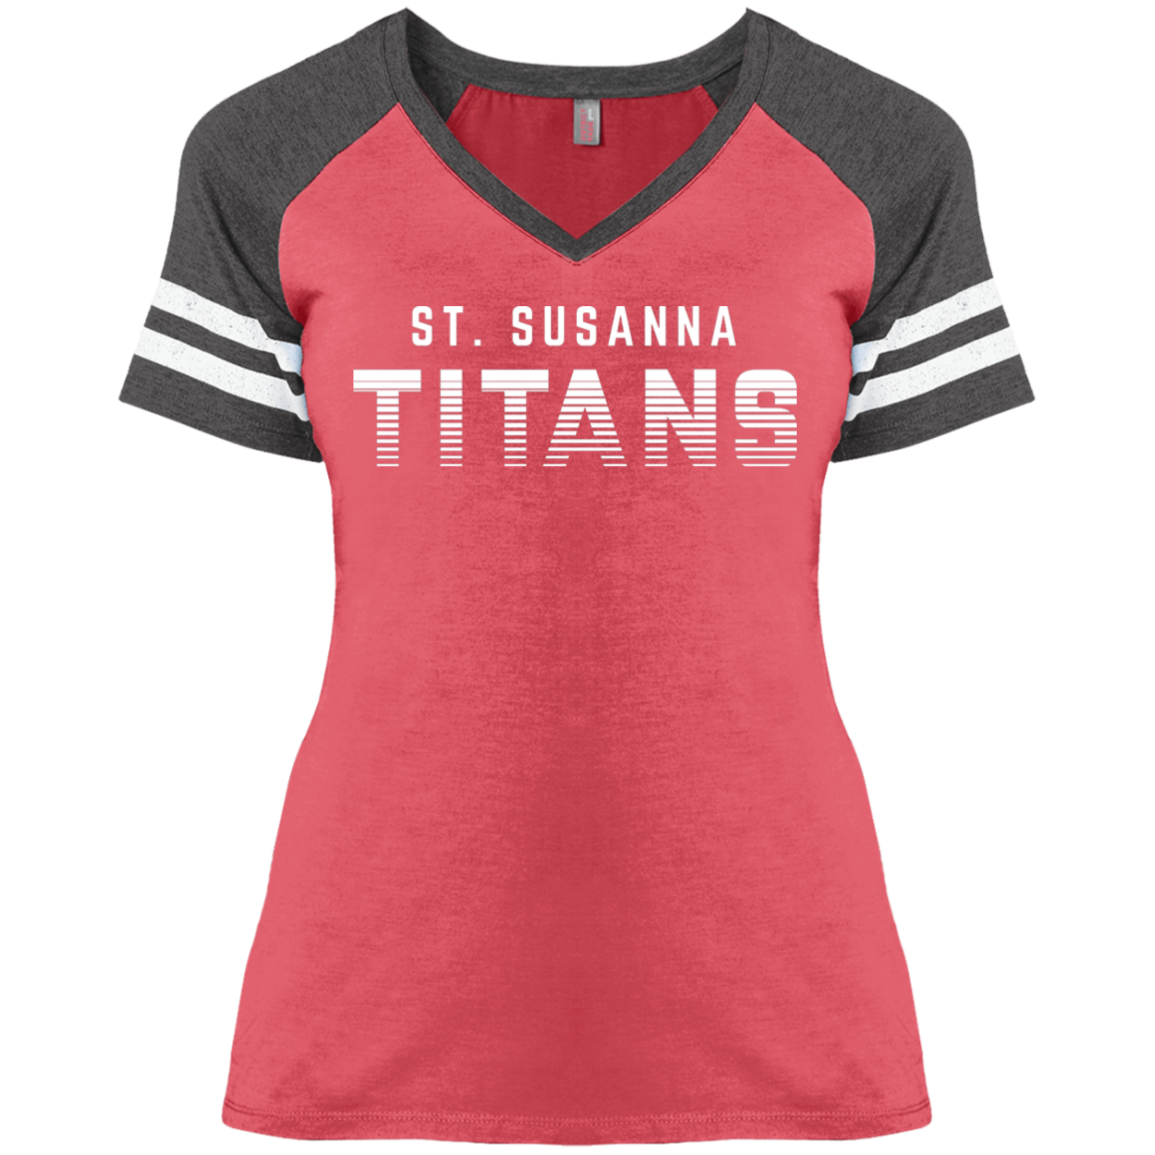 St. Susanna Titans Fade (Red) Ladies' Game V-Neck T-Shirt